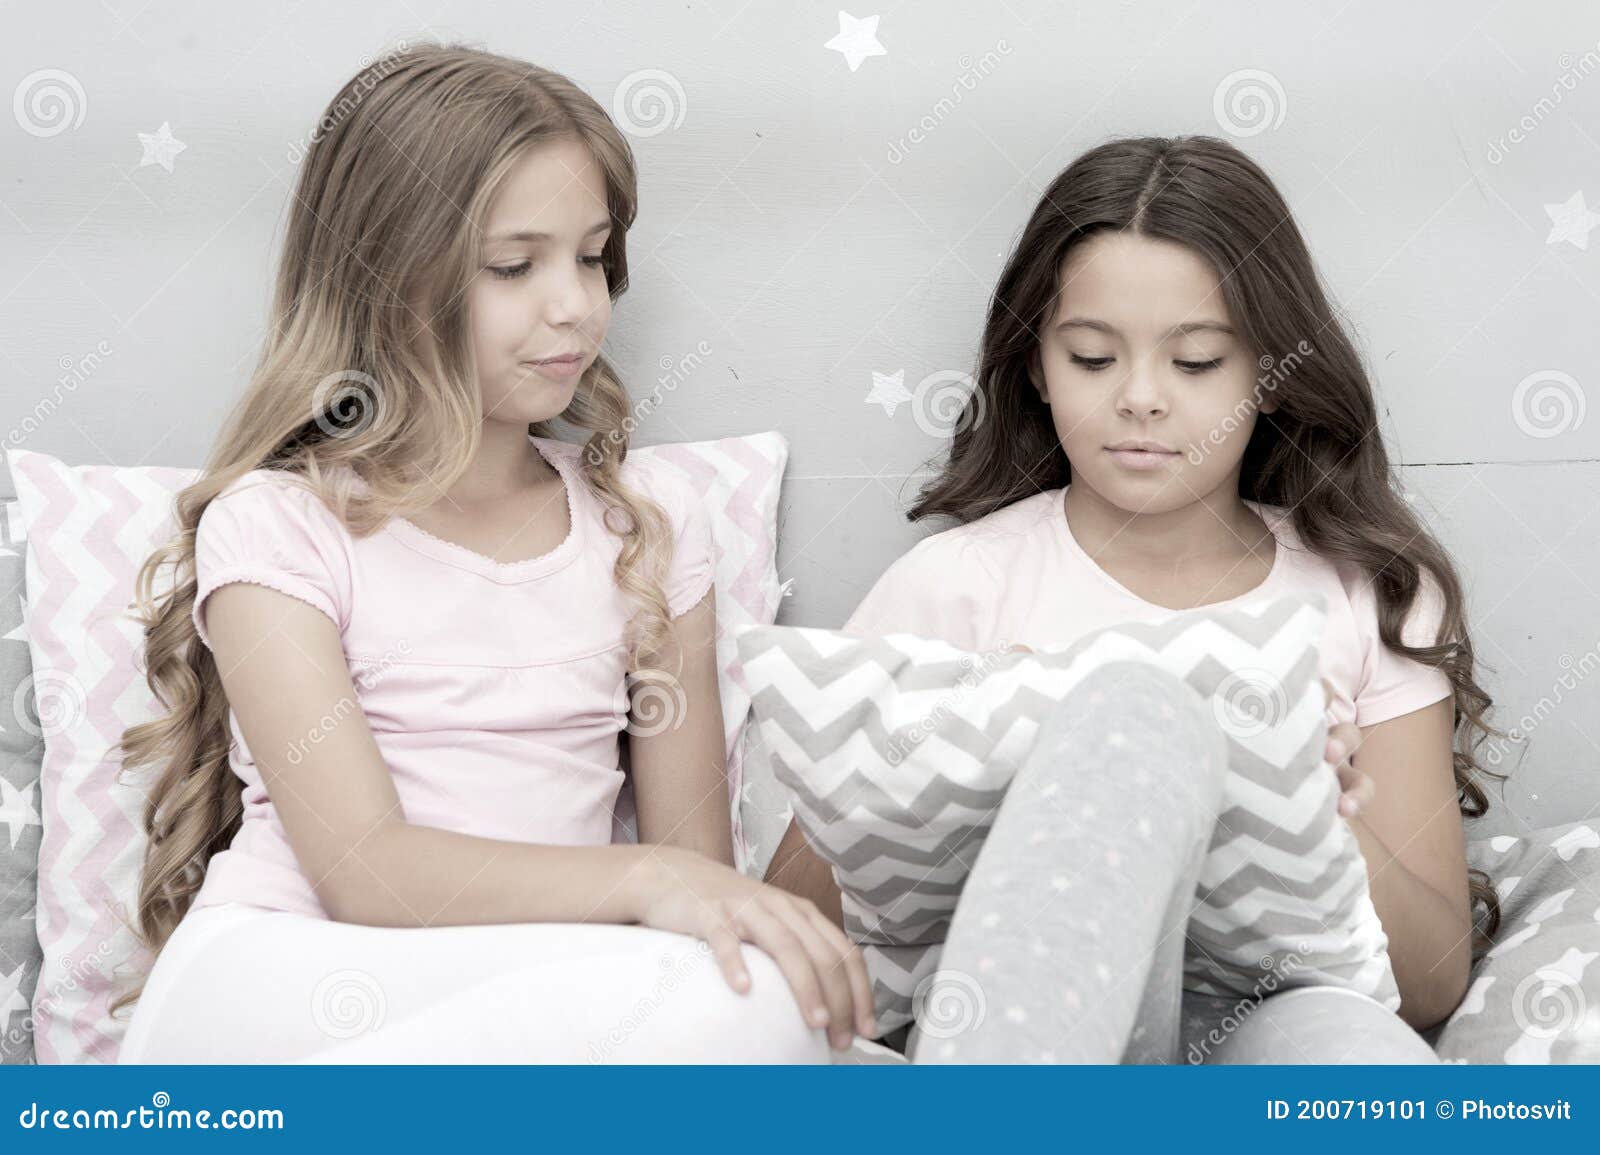 Сестра лижет сестре с разговорами